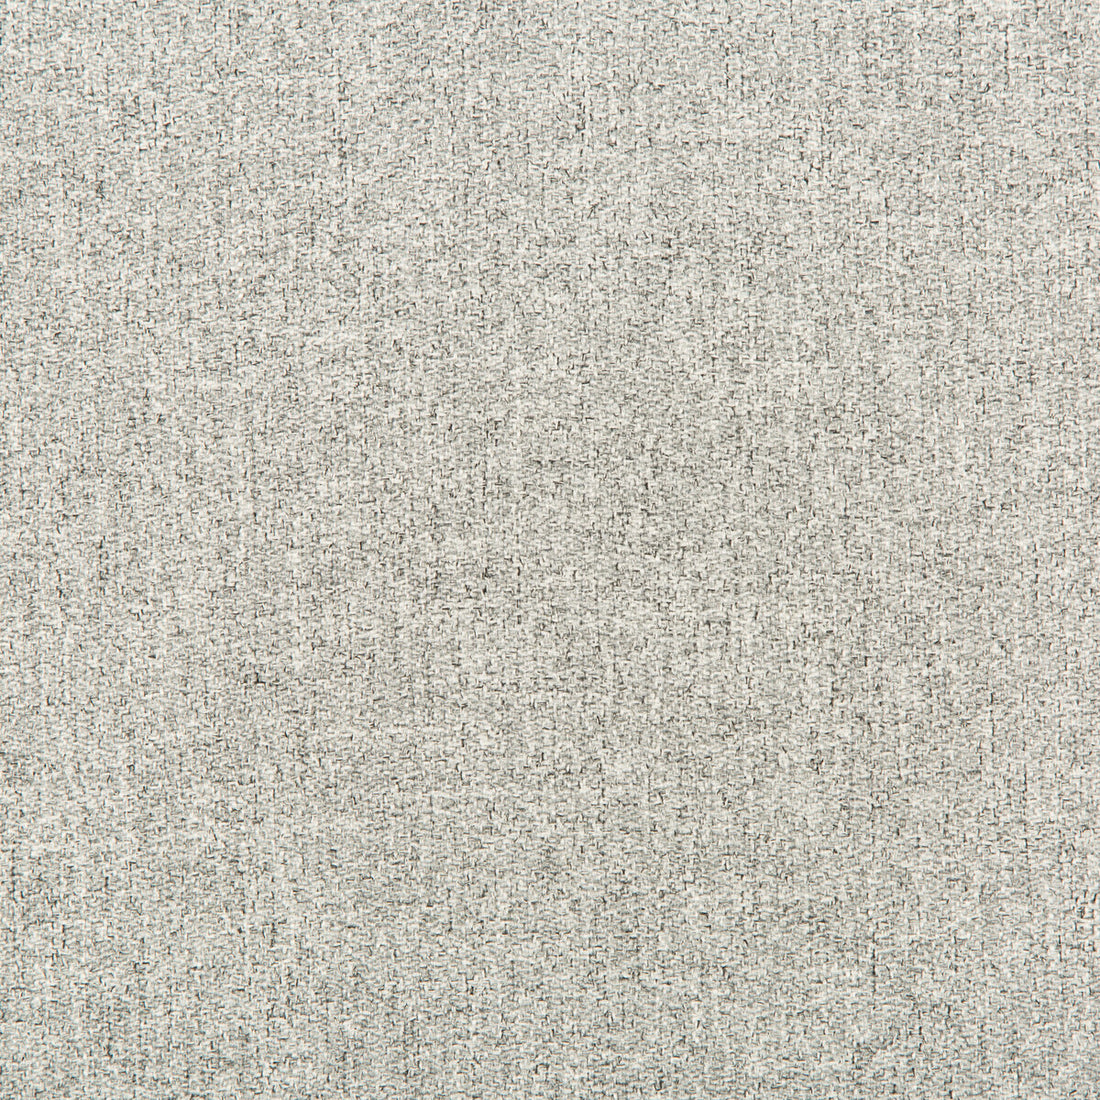 Tweedford fabric in grey color - pattern 35346.11.0 - by Kravet Basics